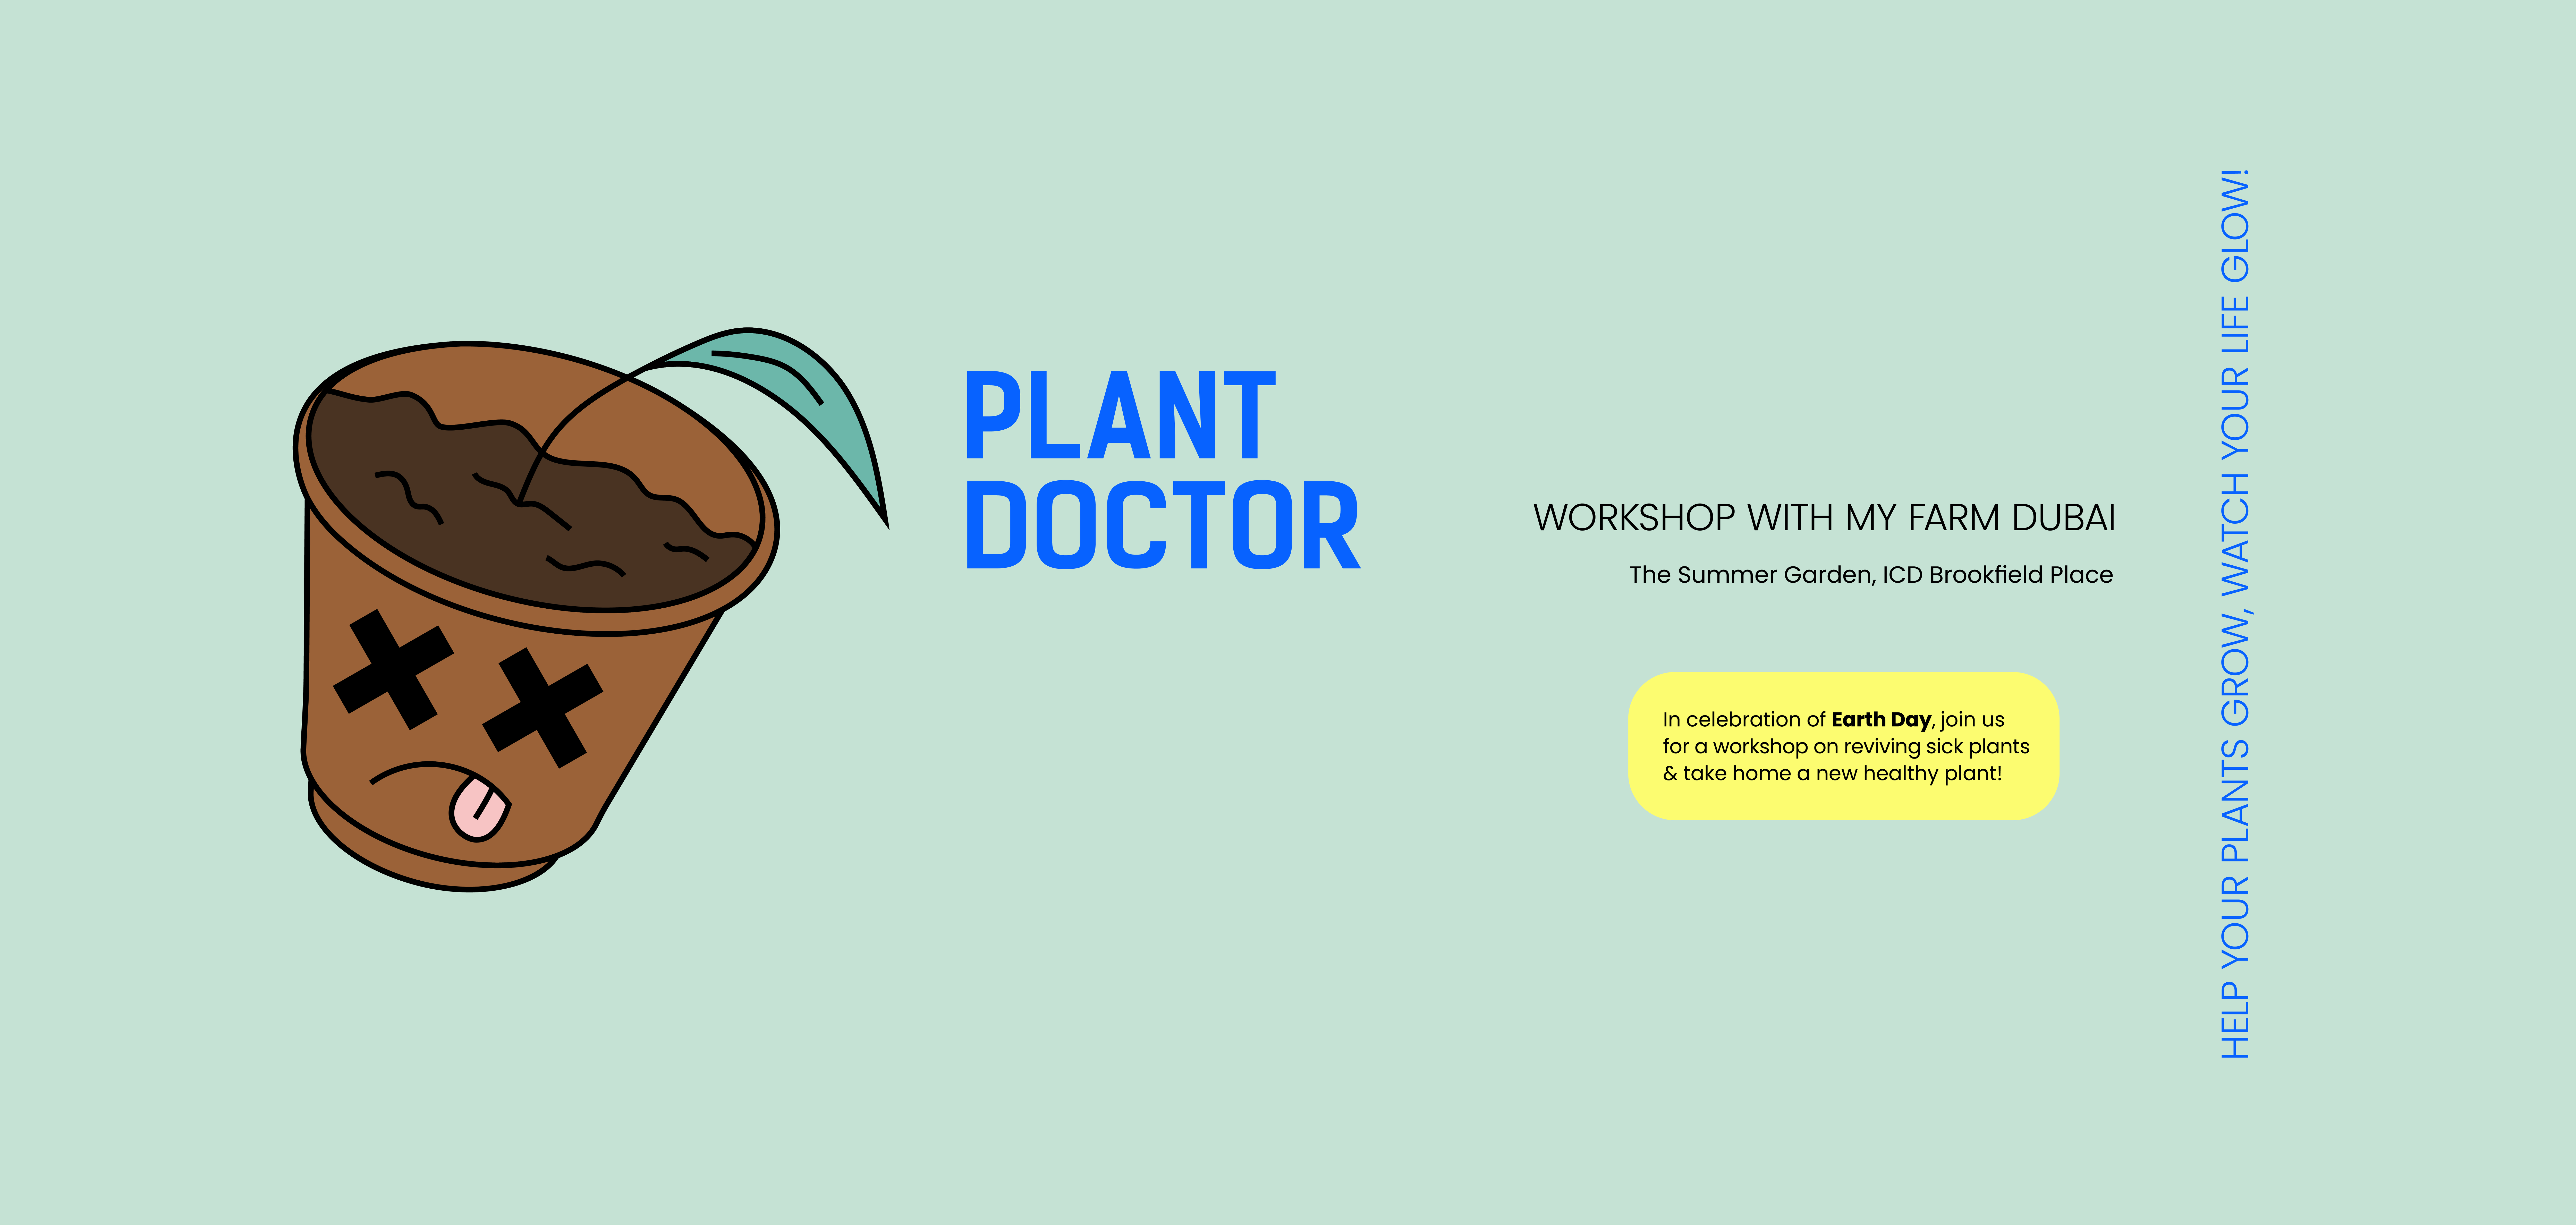 ICD Brookfield Place Dubai Earth Day: Plant Doctor Workshop with My Farm Dubai